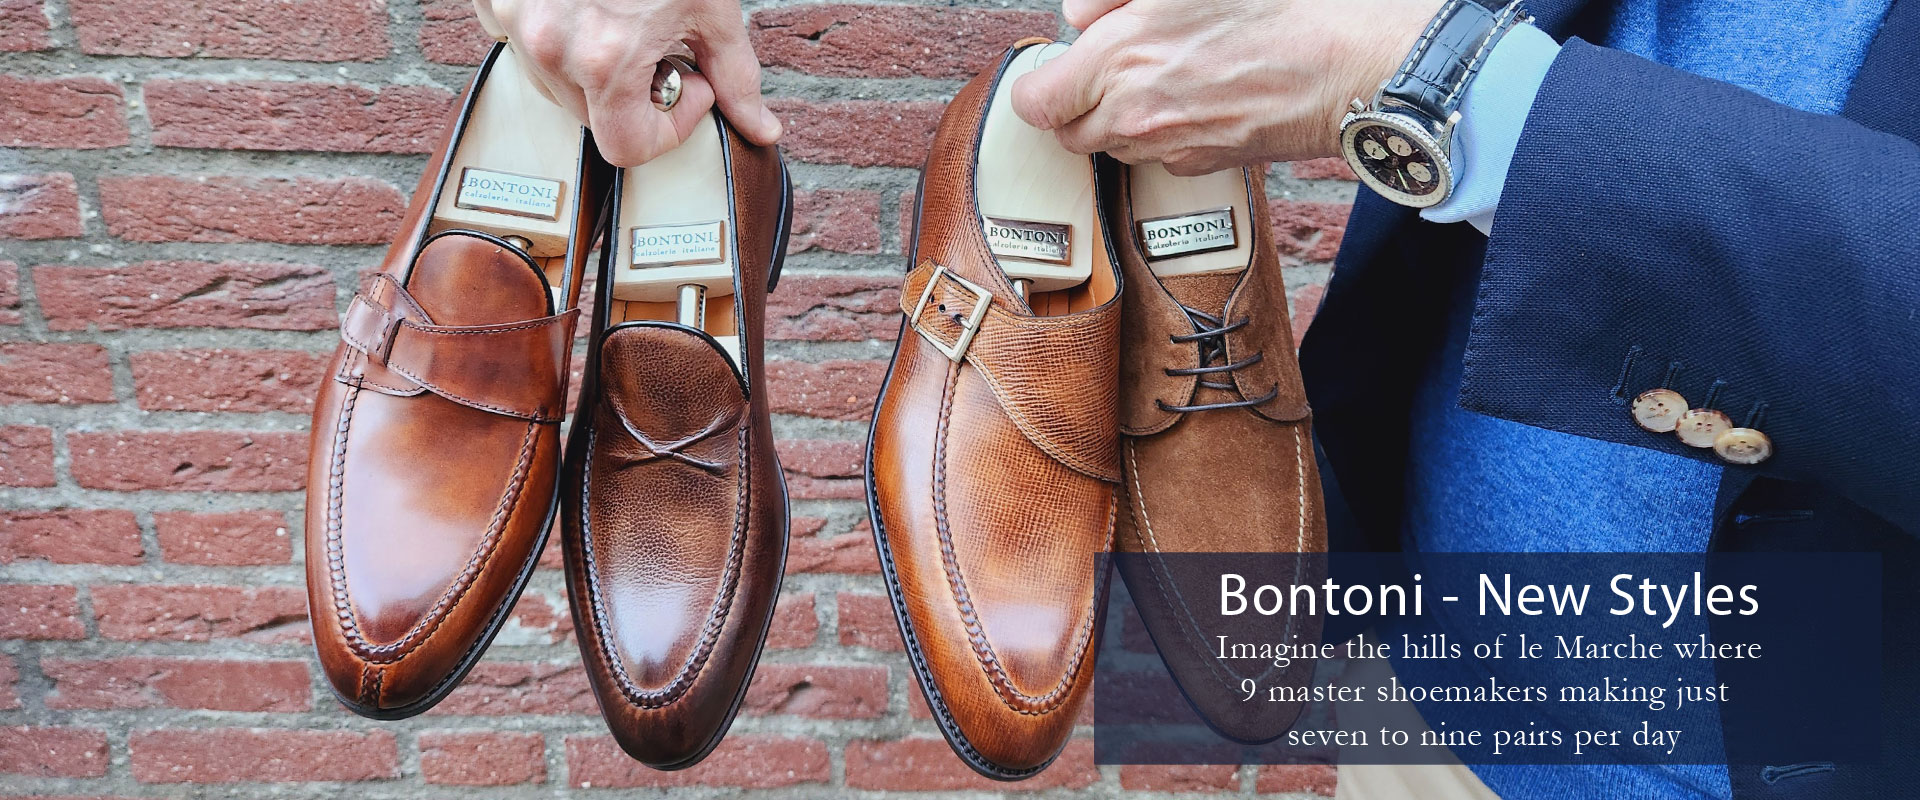 Bontoni Buckled Leather Shoes - Farfetch